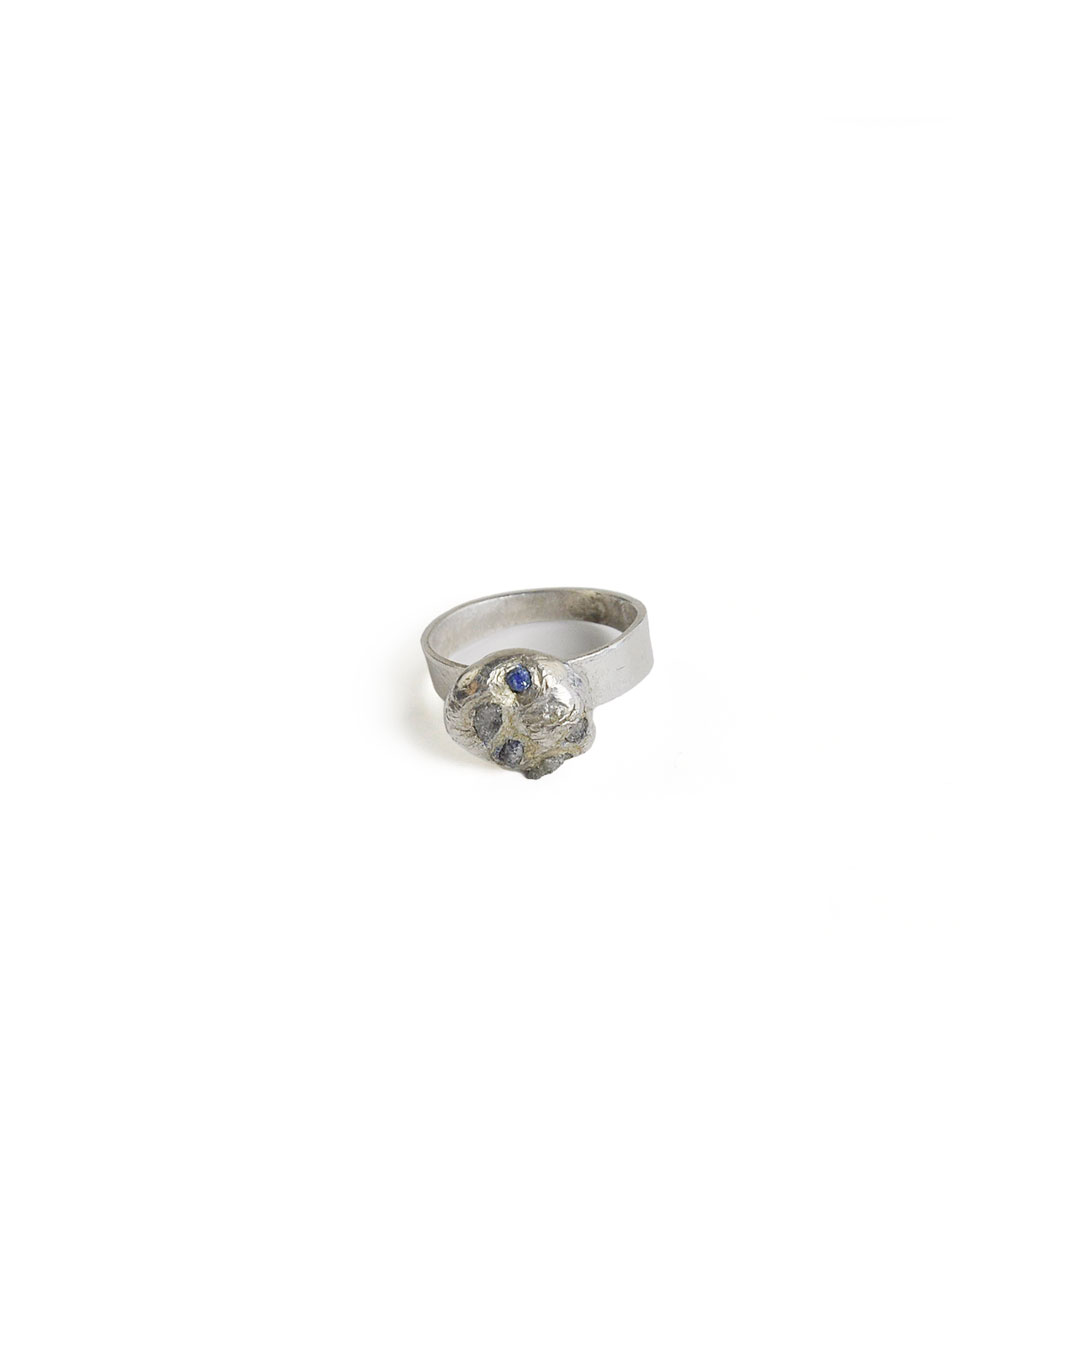 Rudolf Kocéa, untitled, 2014, ring; silver, copper, uncut diamonds, 25 x 10 mm, €730